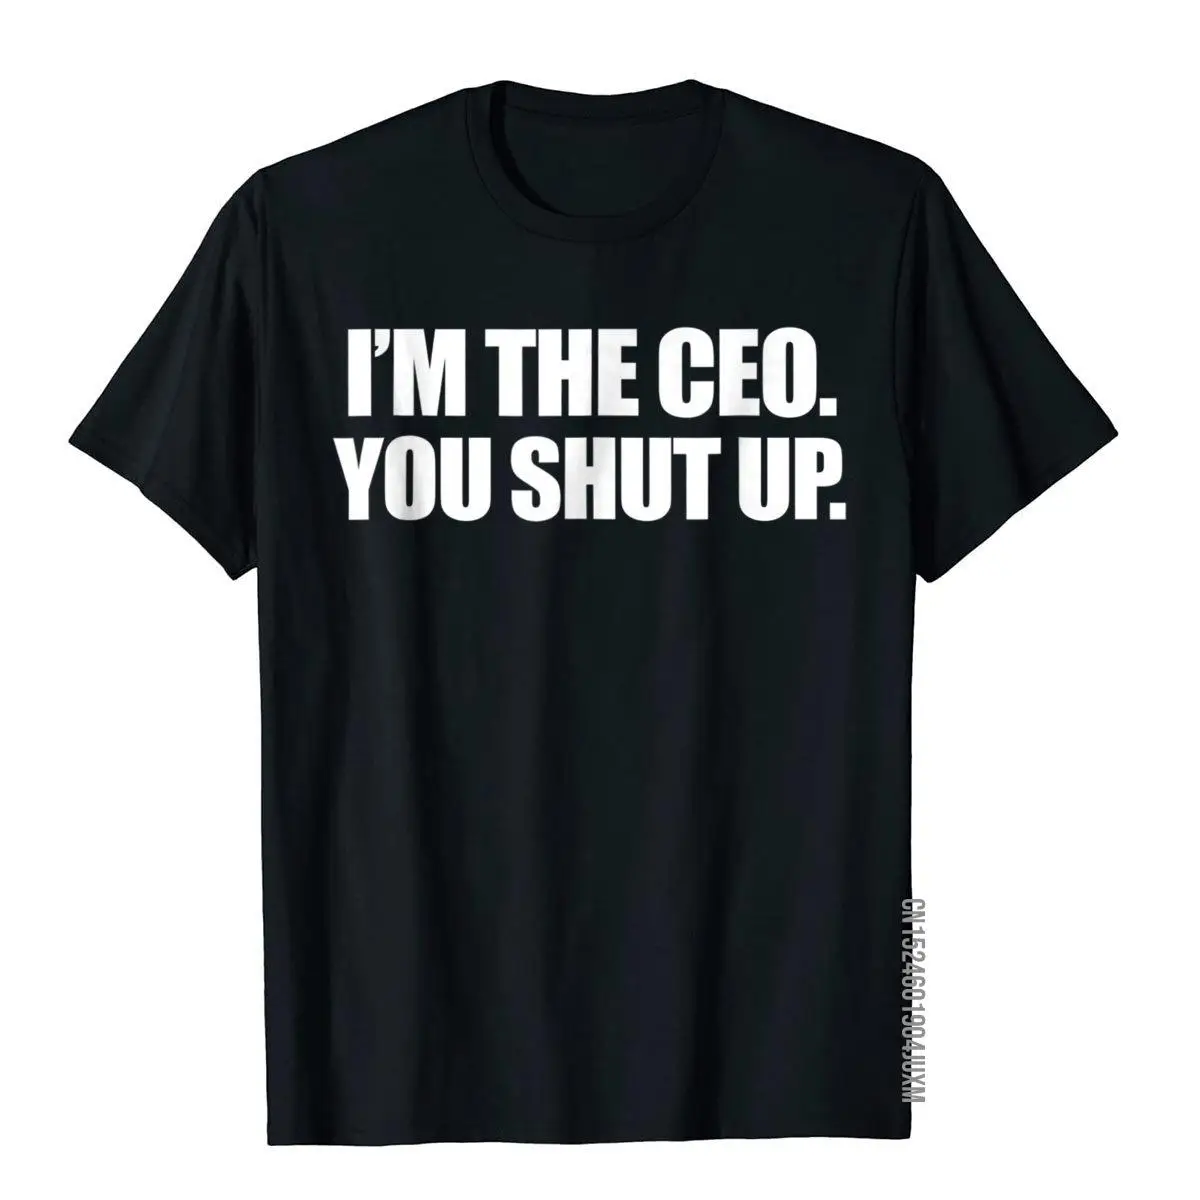 

I'm The CEO You Shut Up Funny Sayings Great Gifts T-Shirt Tops T Shirt Faddish Outdoor Cotton Men's T Shirt Crazy